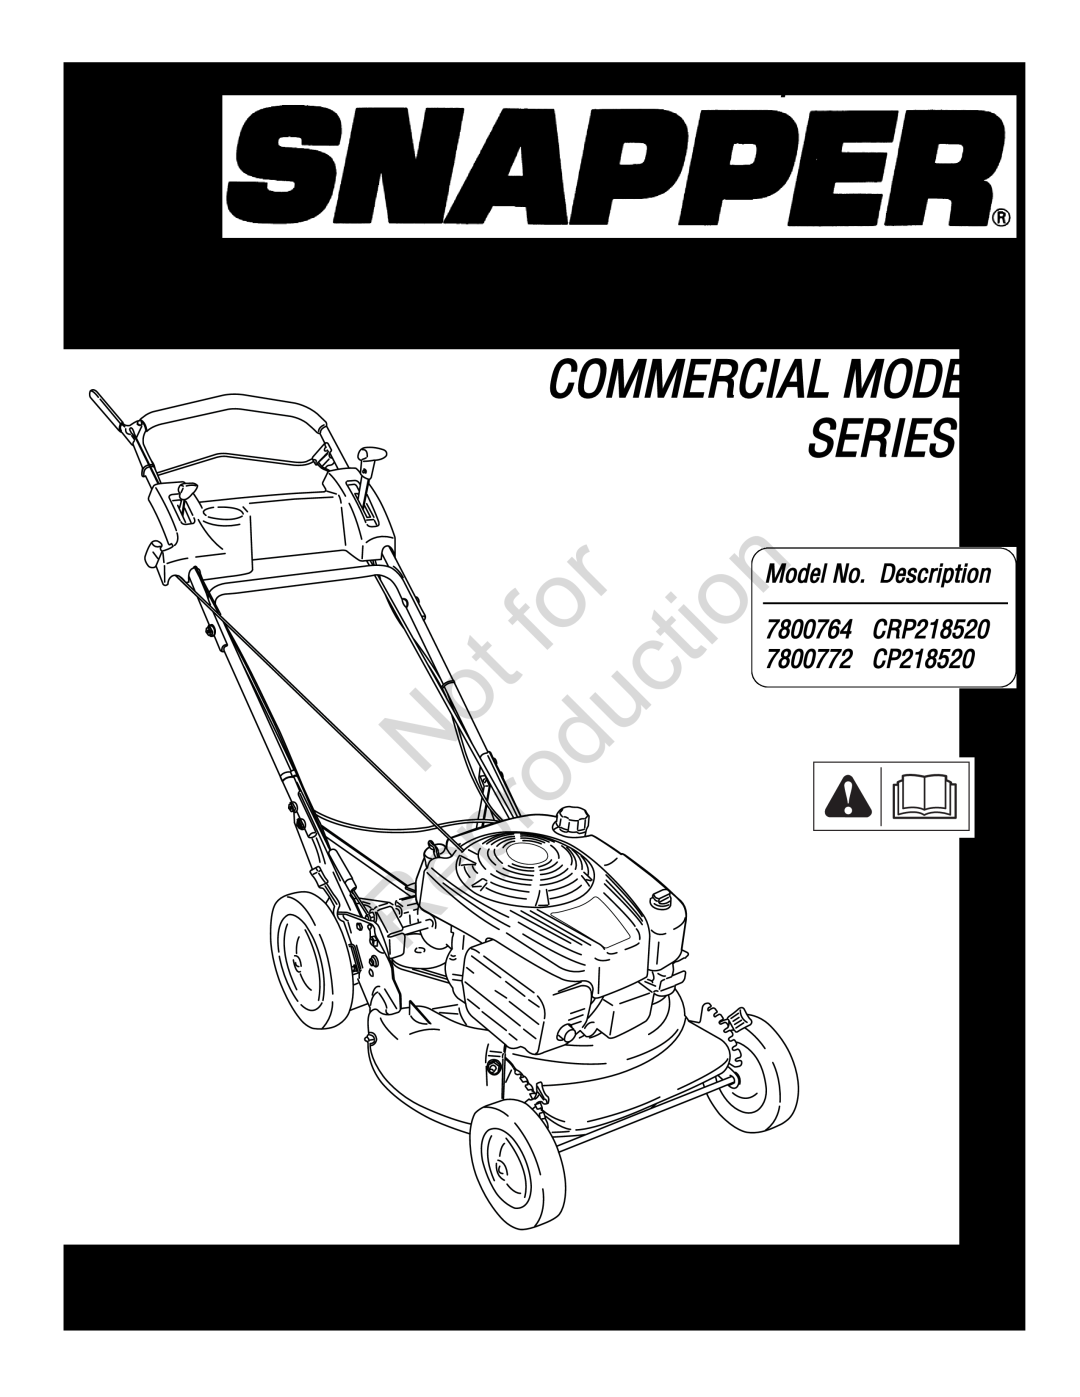 Snapper manual Reproduction, Walk Mowers Commercial Models Series, 21” STEEL DECK, Operators Manual, 7800772 CP218520 